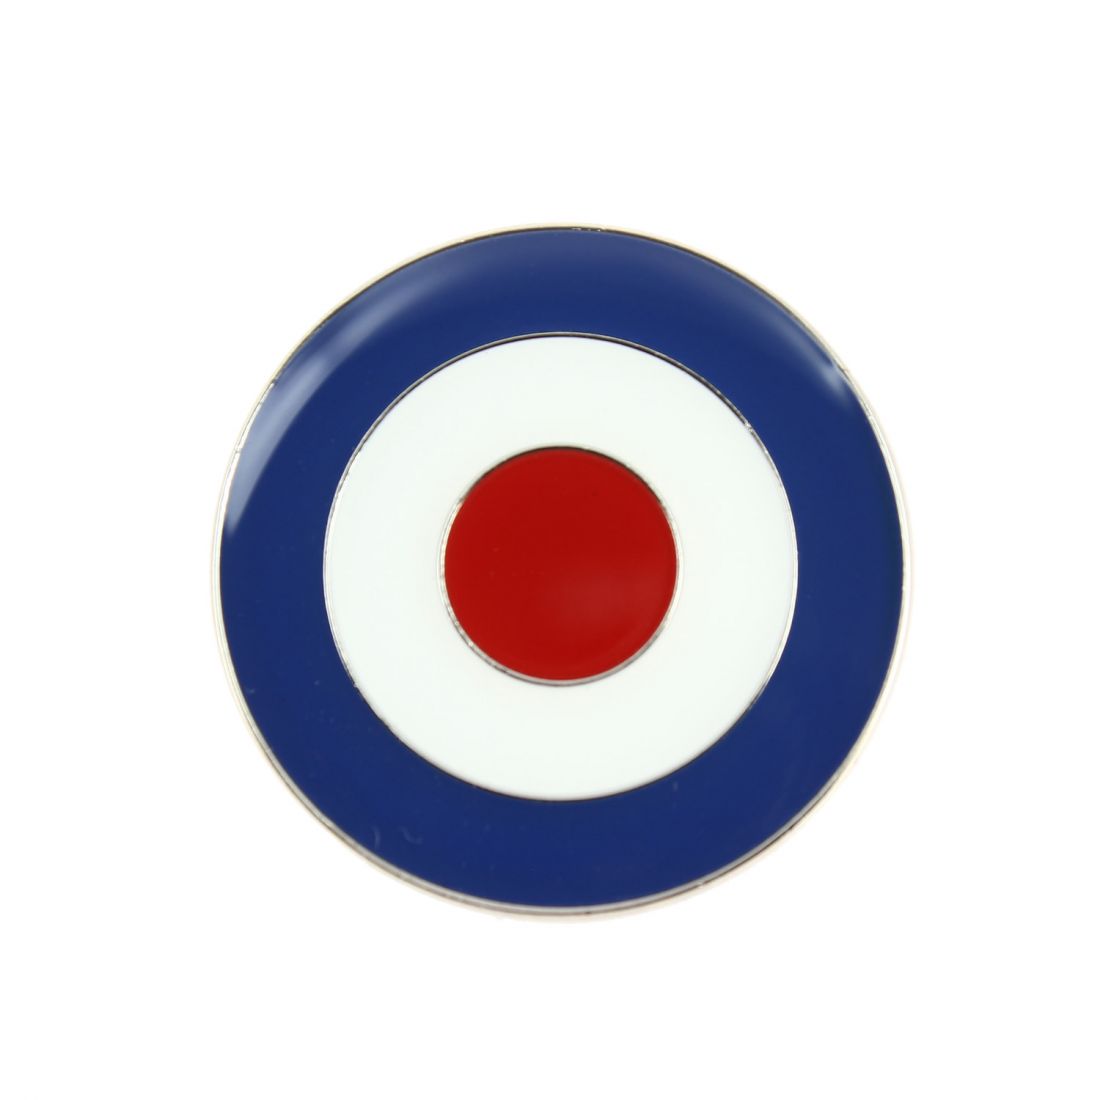 Pins Clj Charles Le Jeune Cocarde Royal Air Force bleu blanc rouge